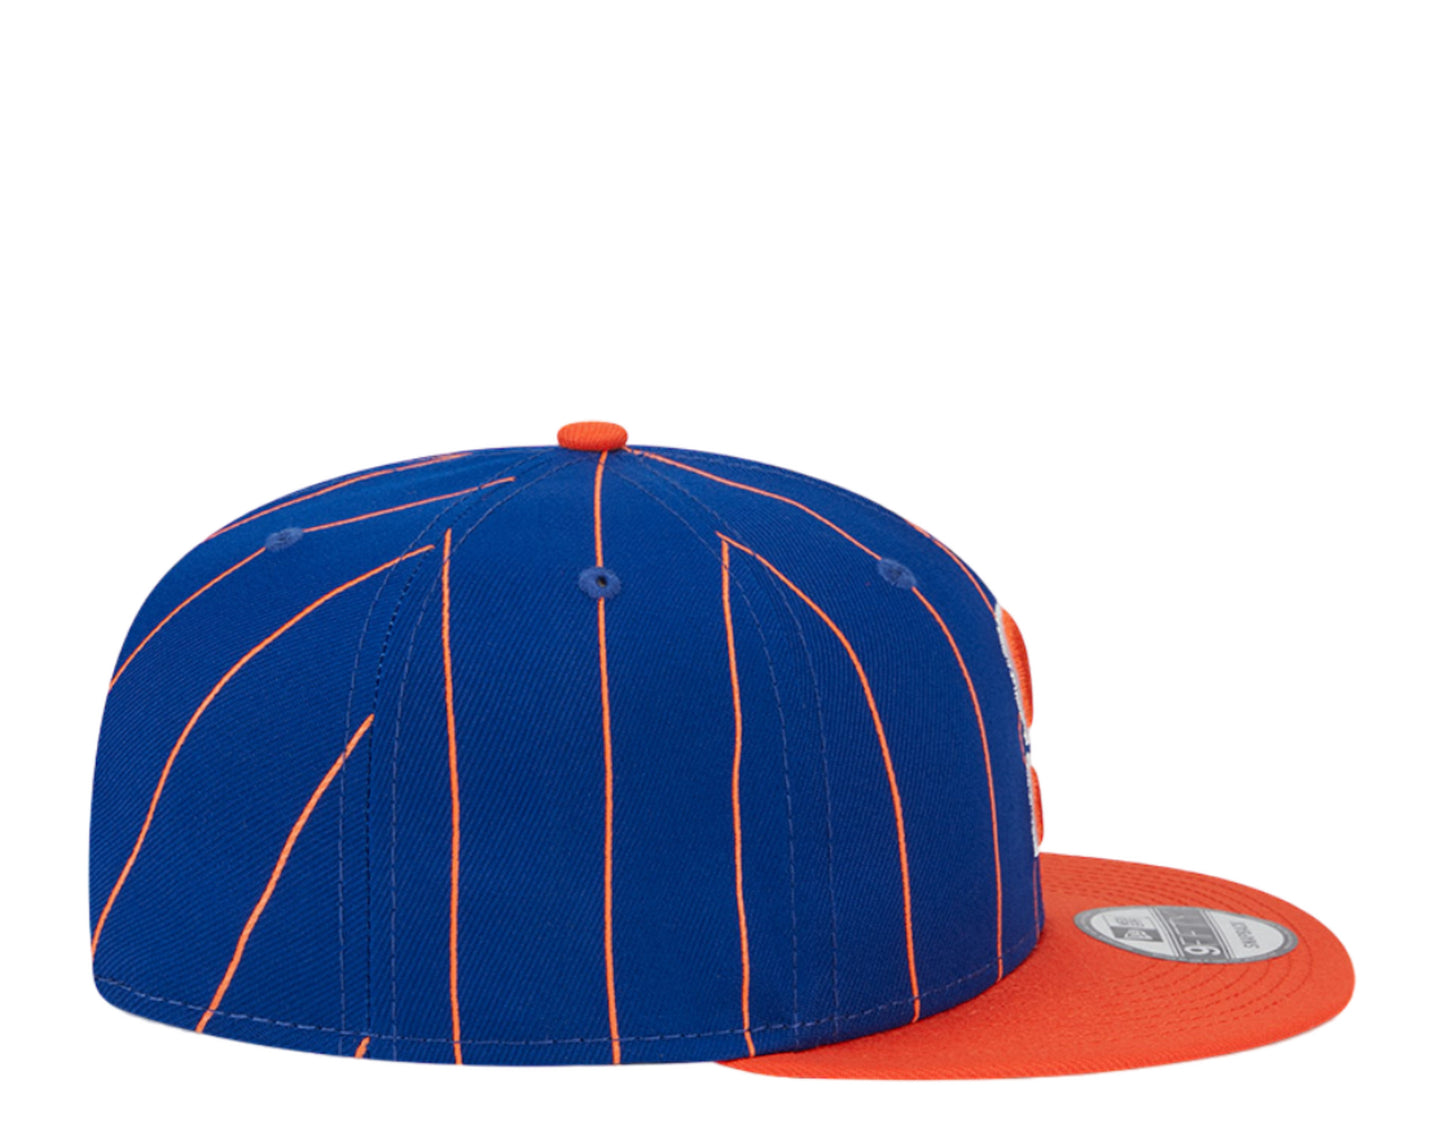 Los Mets - New Era Snapback (Orange)